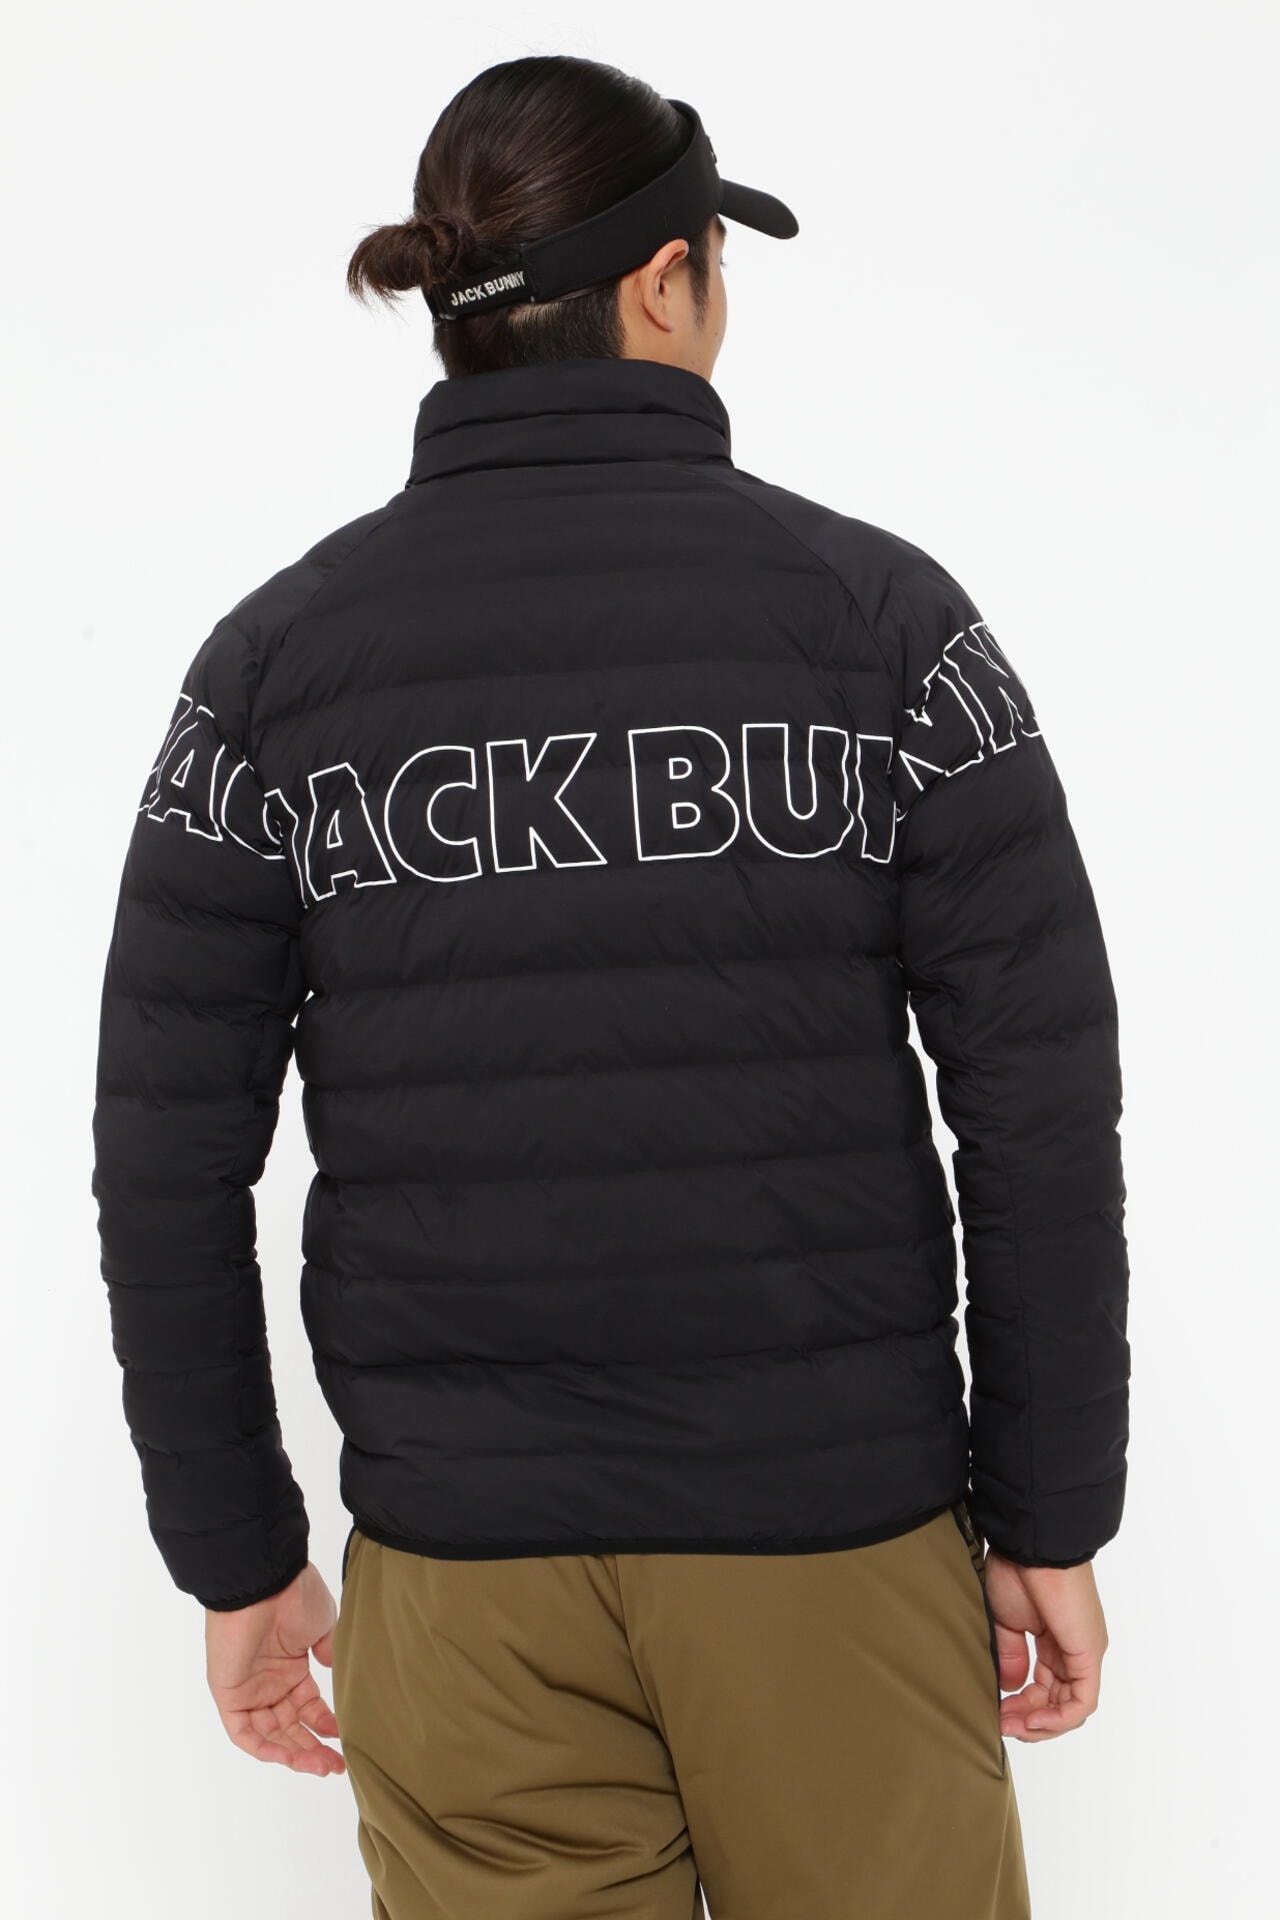 JACK BUNNY ナイロンタフタ中綿ジャケット裄丈85cm - メンズウェア